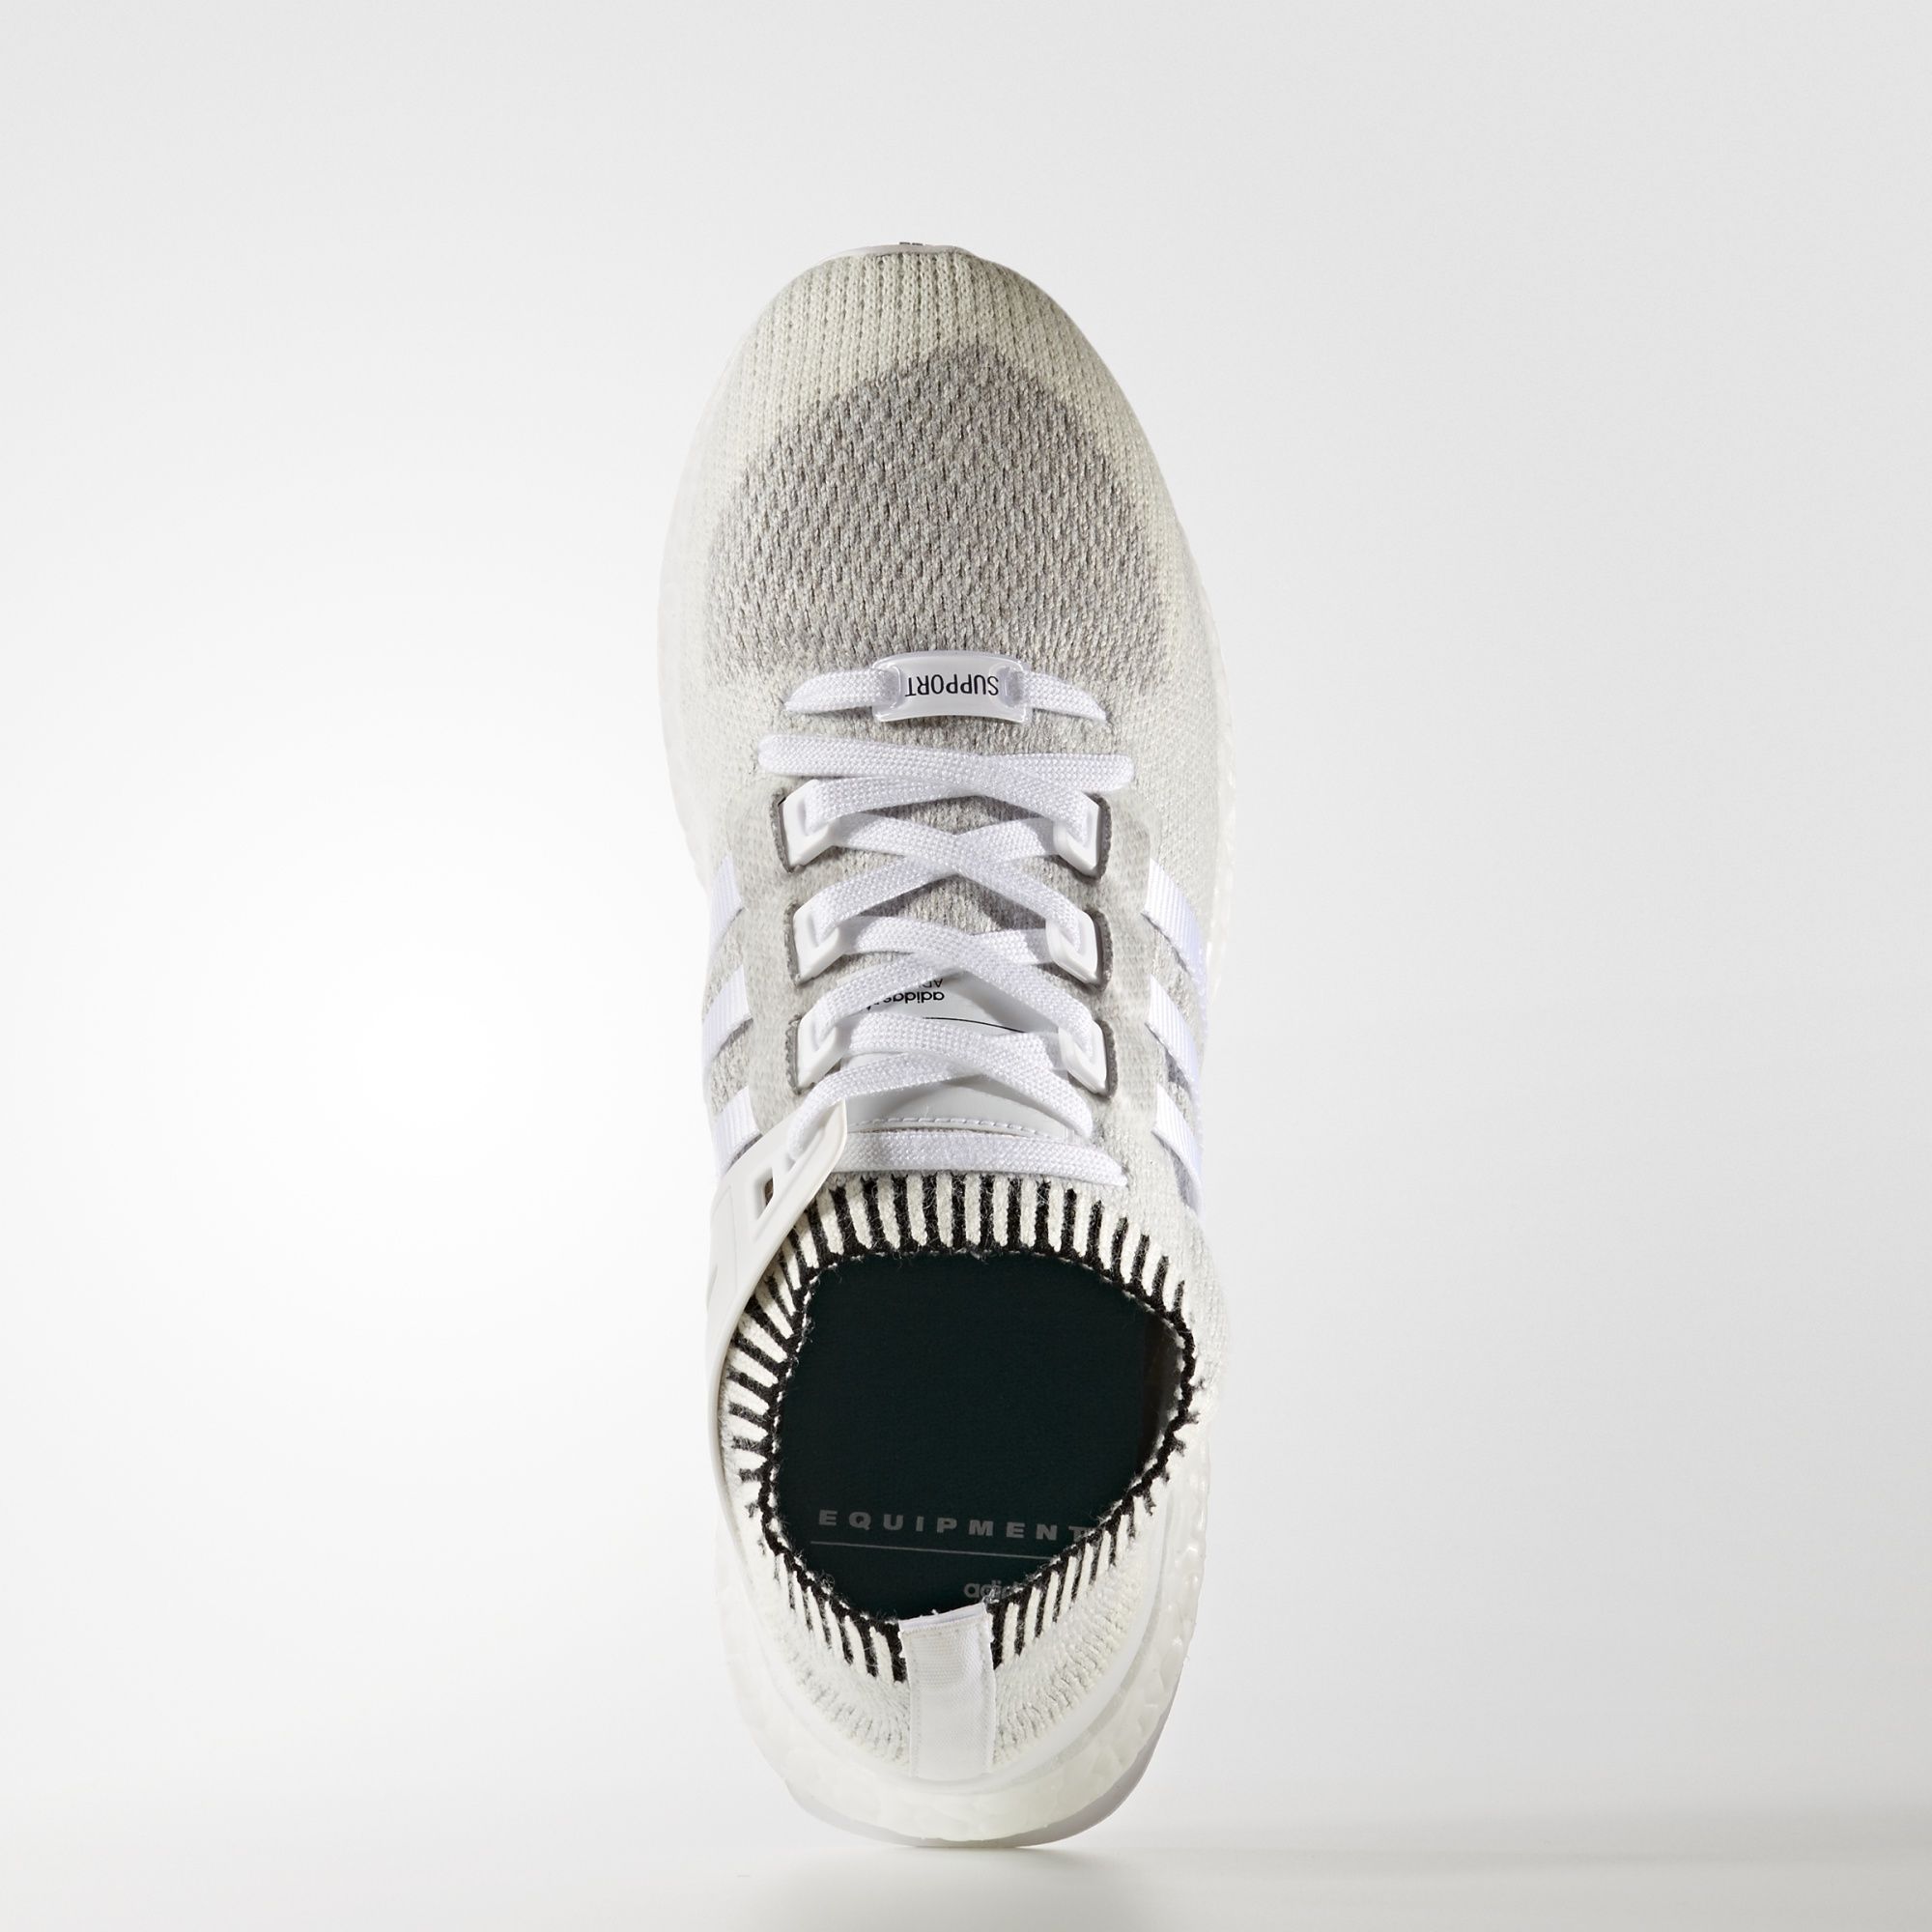 Adidas EQT Support Ultra Primeknit
Vintage White / Footwear White / Core Black